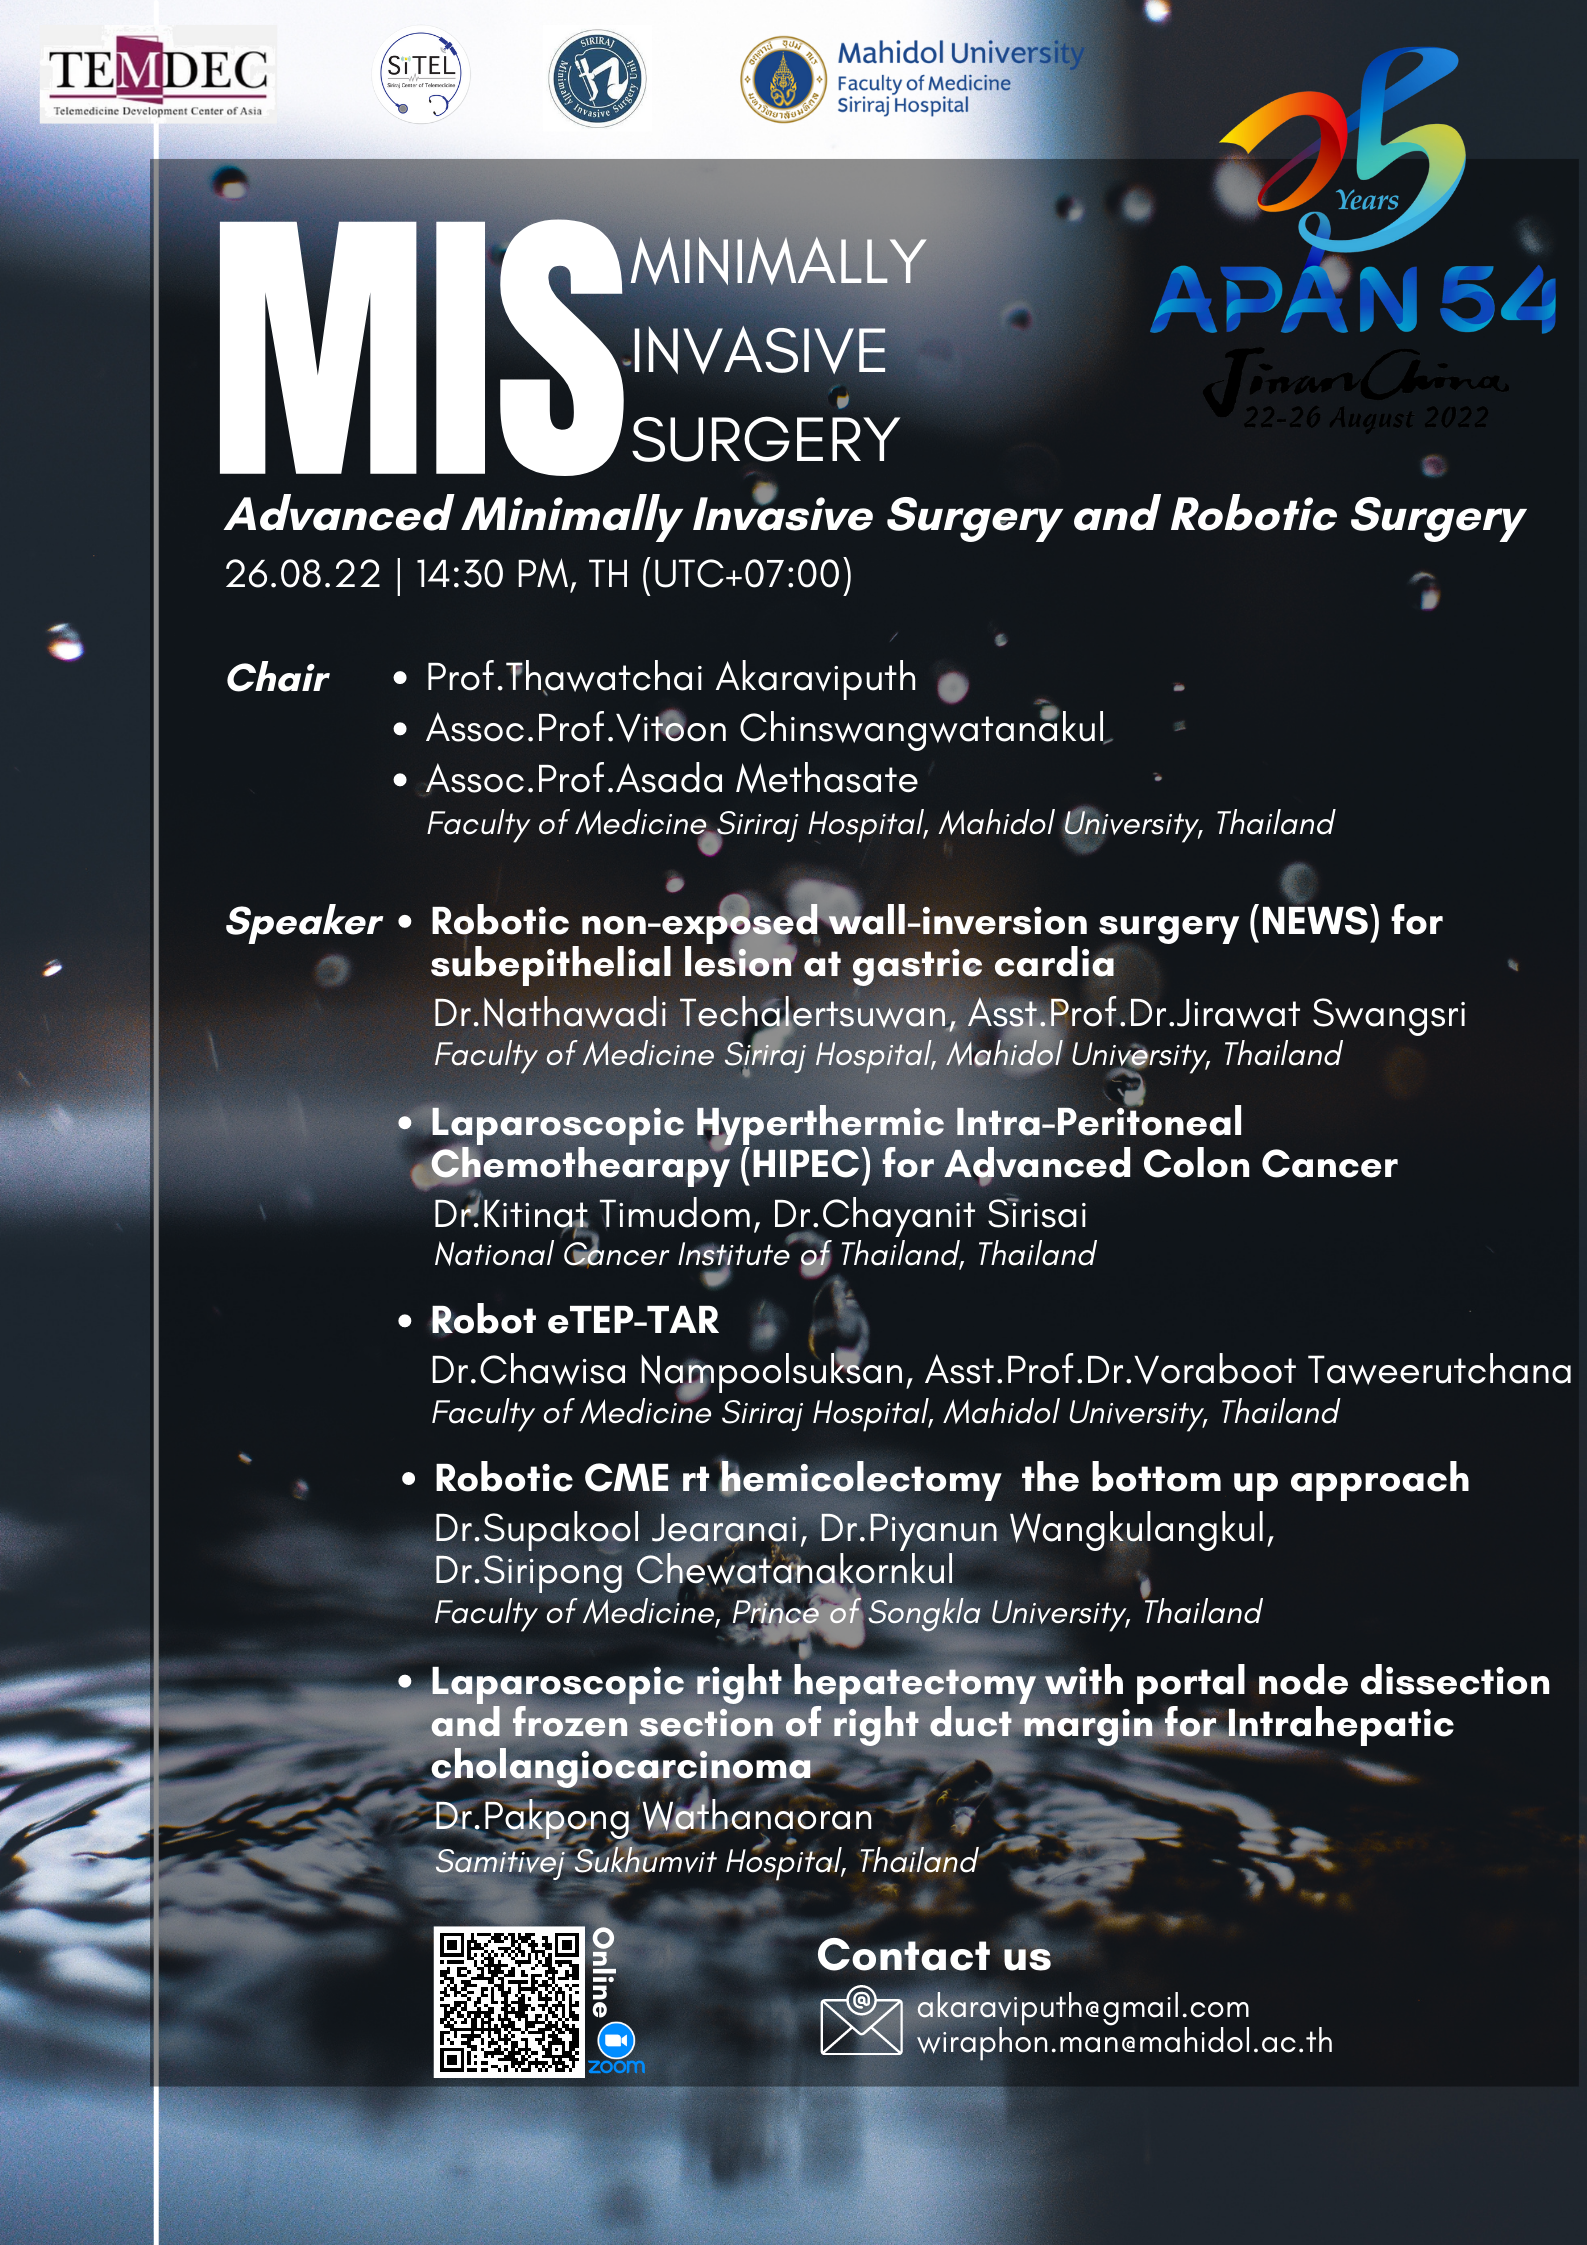 Advanced Minimally Invasive Surgery and Robotic Surgery @ ภาควิชาศัลยศาสตร์ คณะแพทยศาสตร์ศิริราชพยาบาล